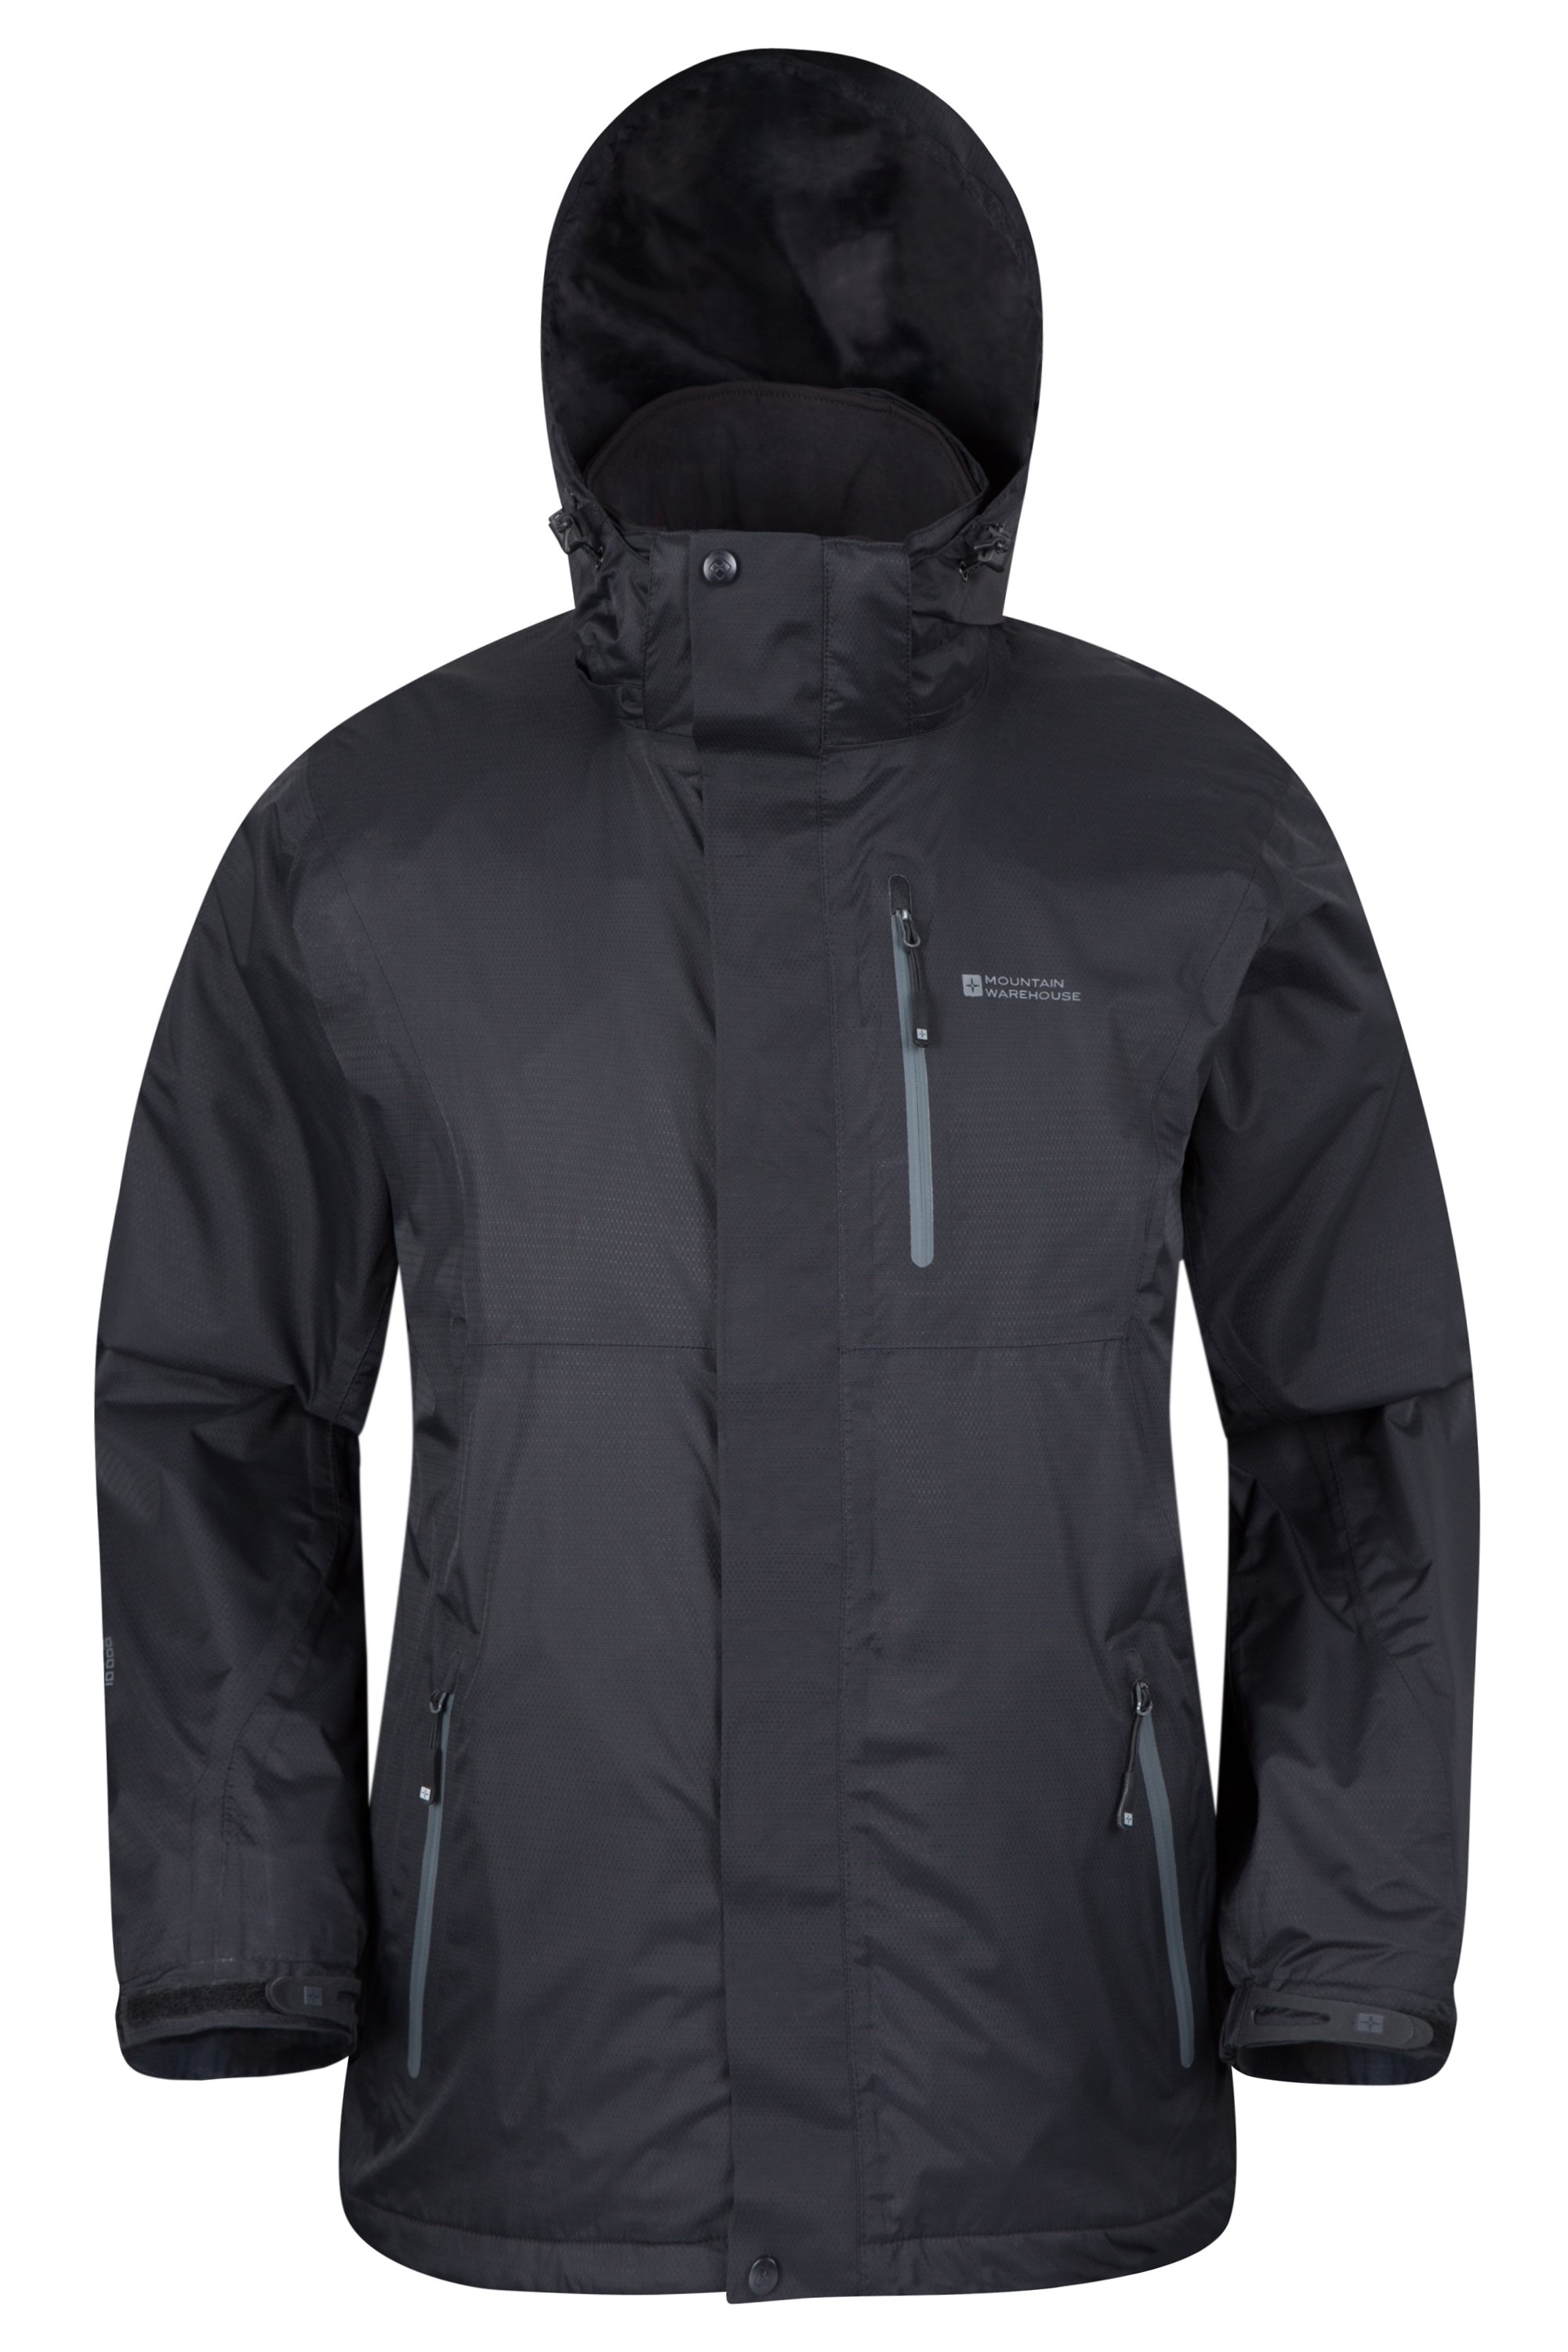 mens waterproof jackets bracken extreme 3 in 1 mens waterproof jacket | mountain warehouse us LRLRVVH